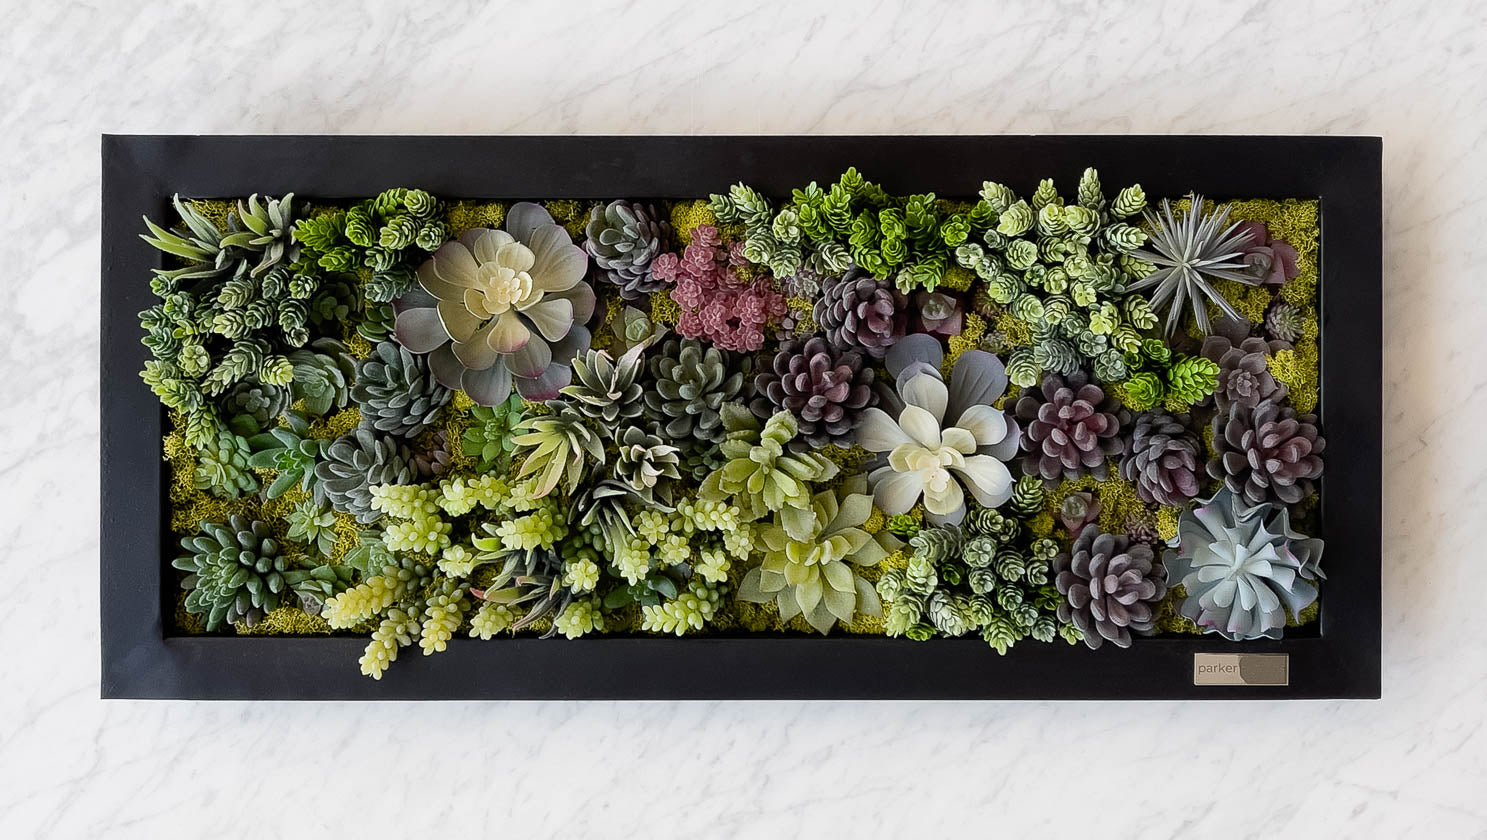 Succulent arrangement in decorative centerpiece tray.